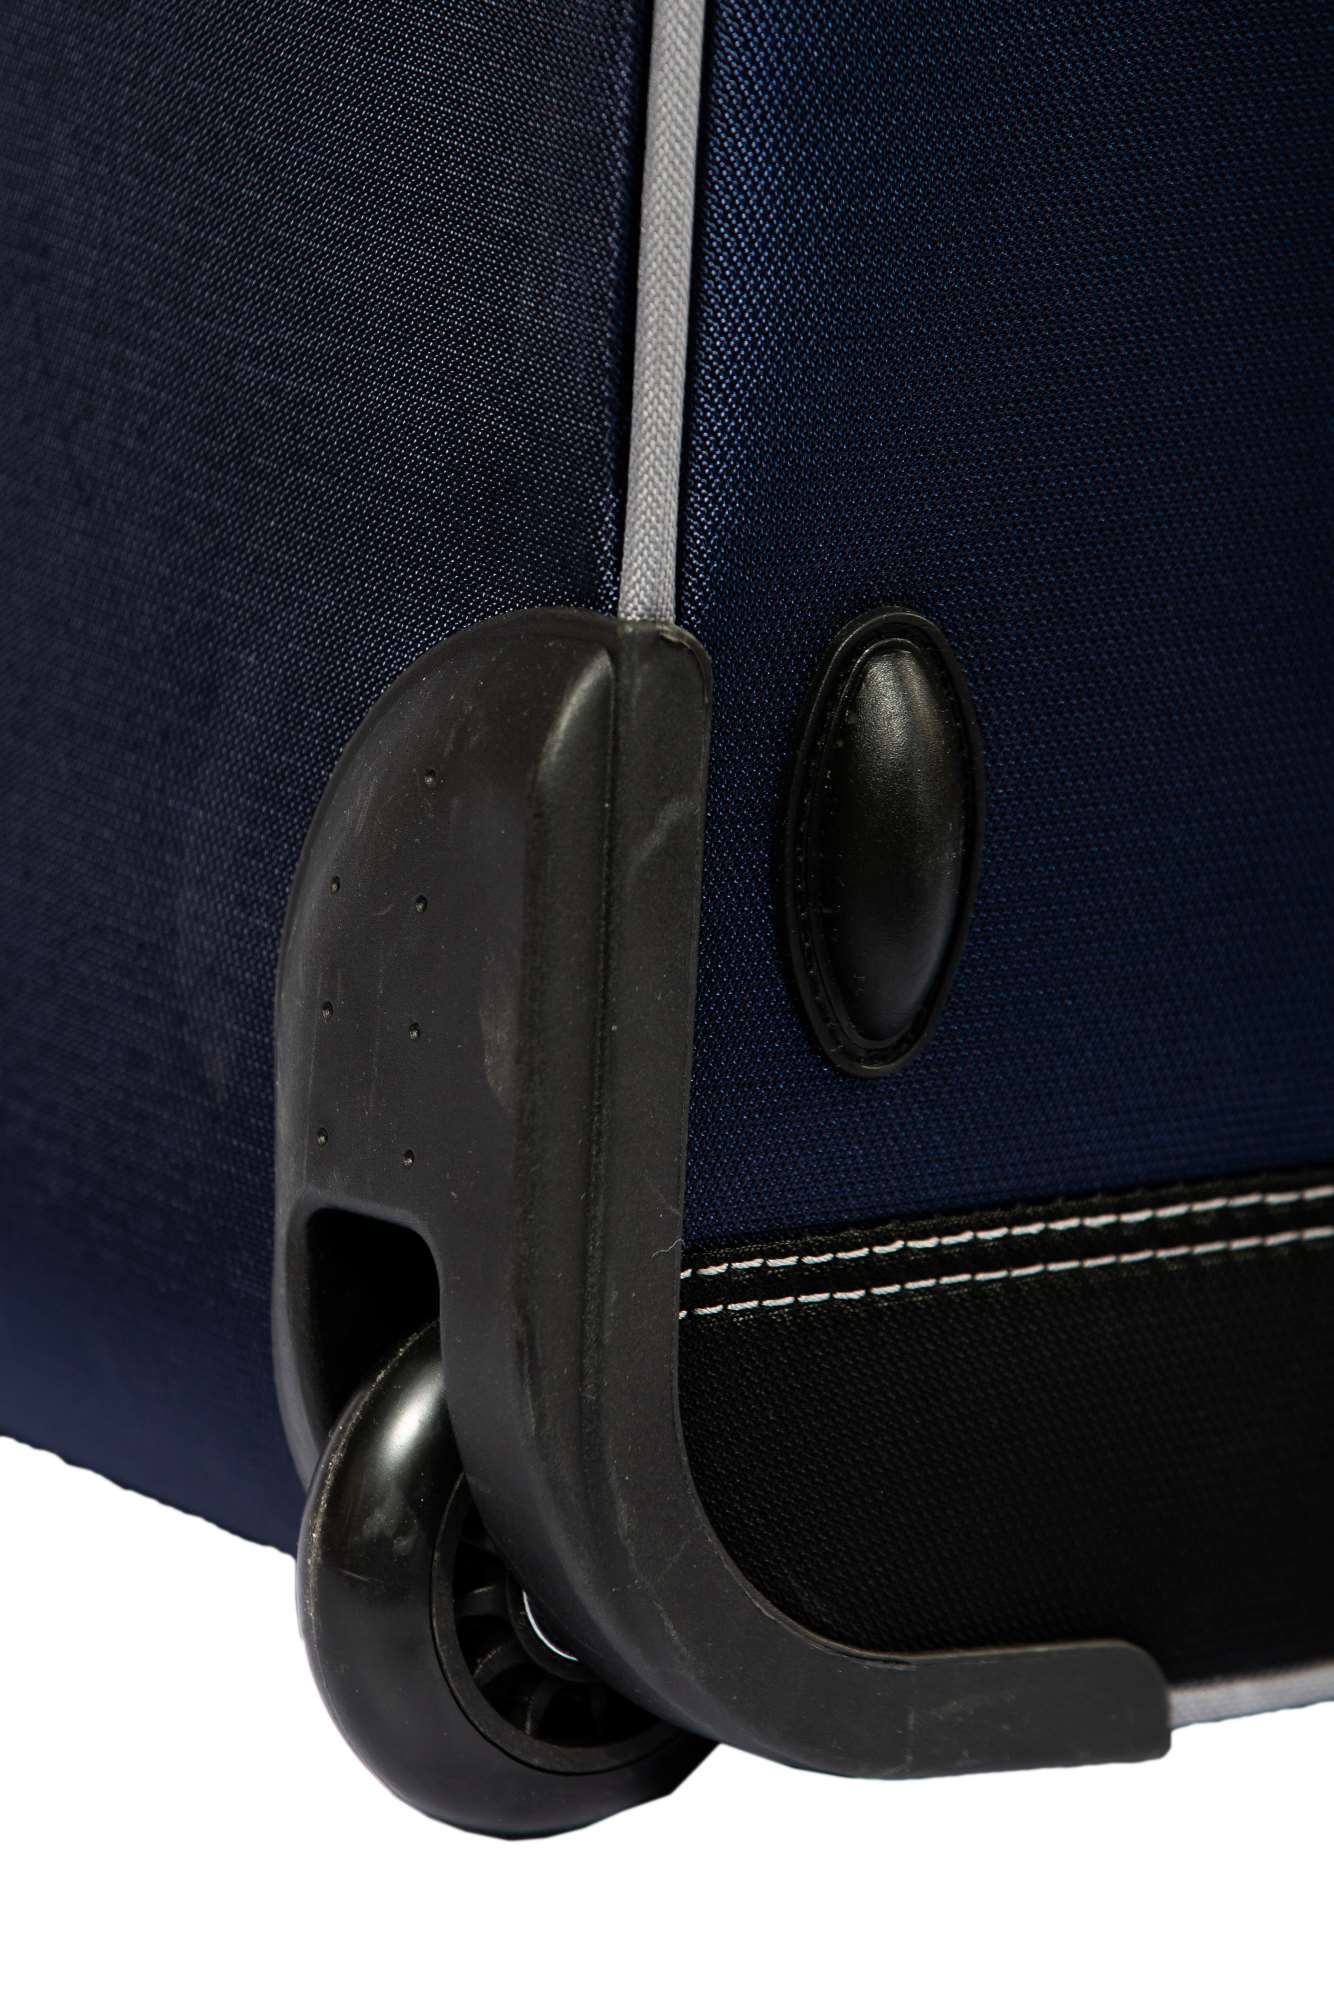 Alezar matkalaukku sininen 55*40*20 cm 